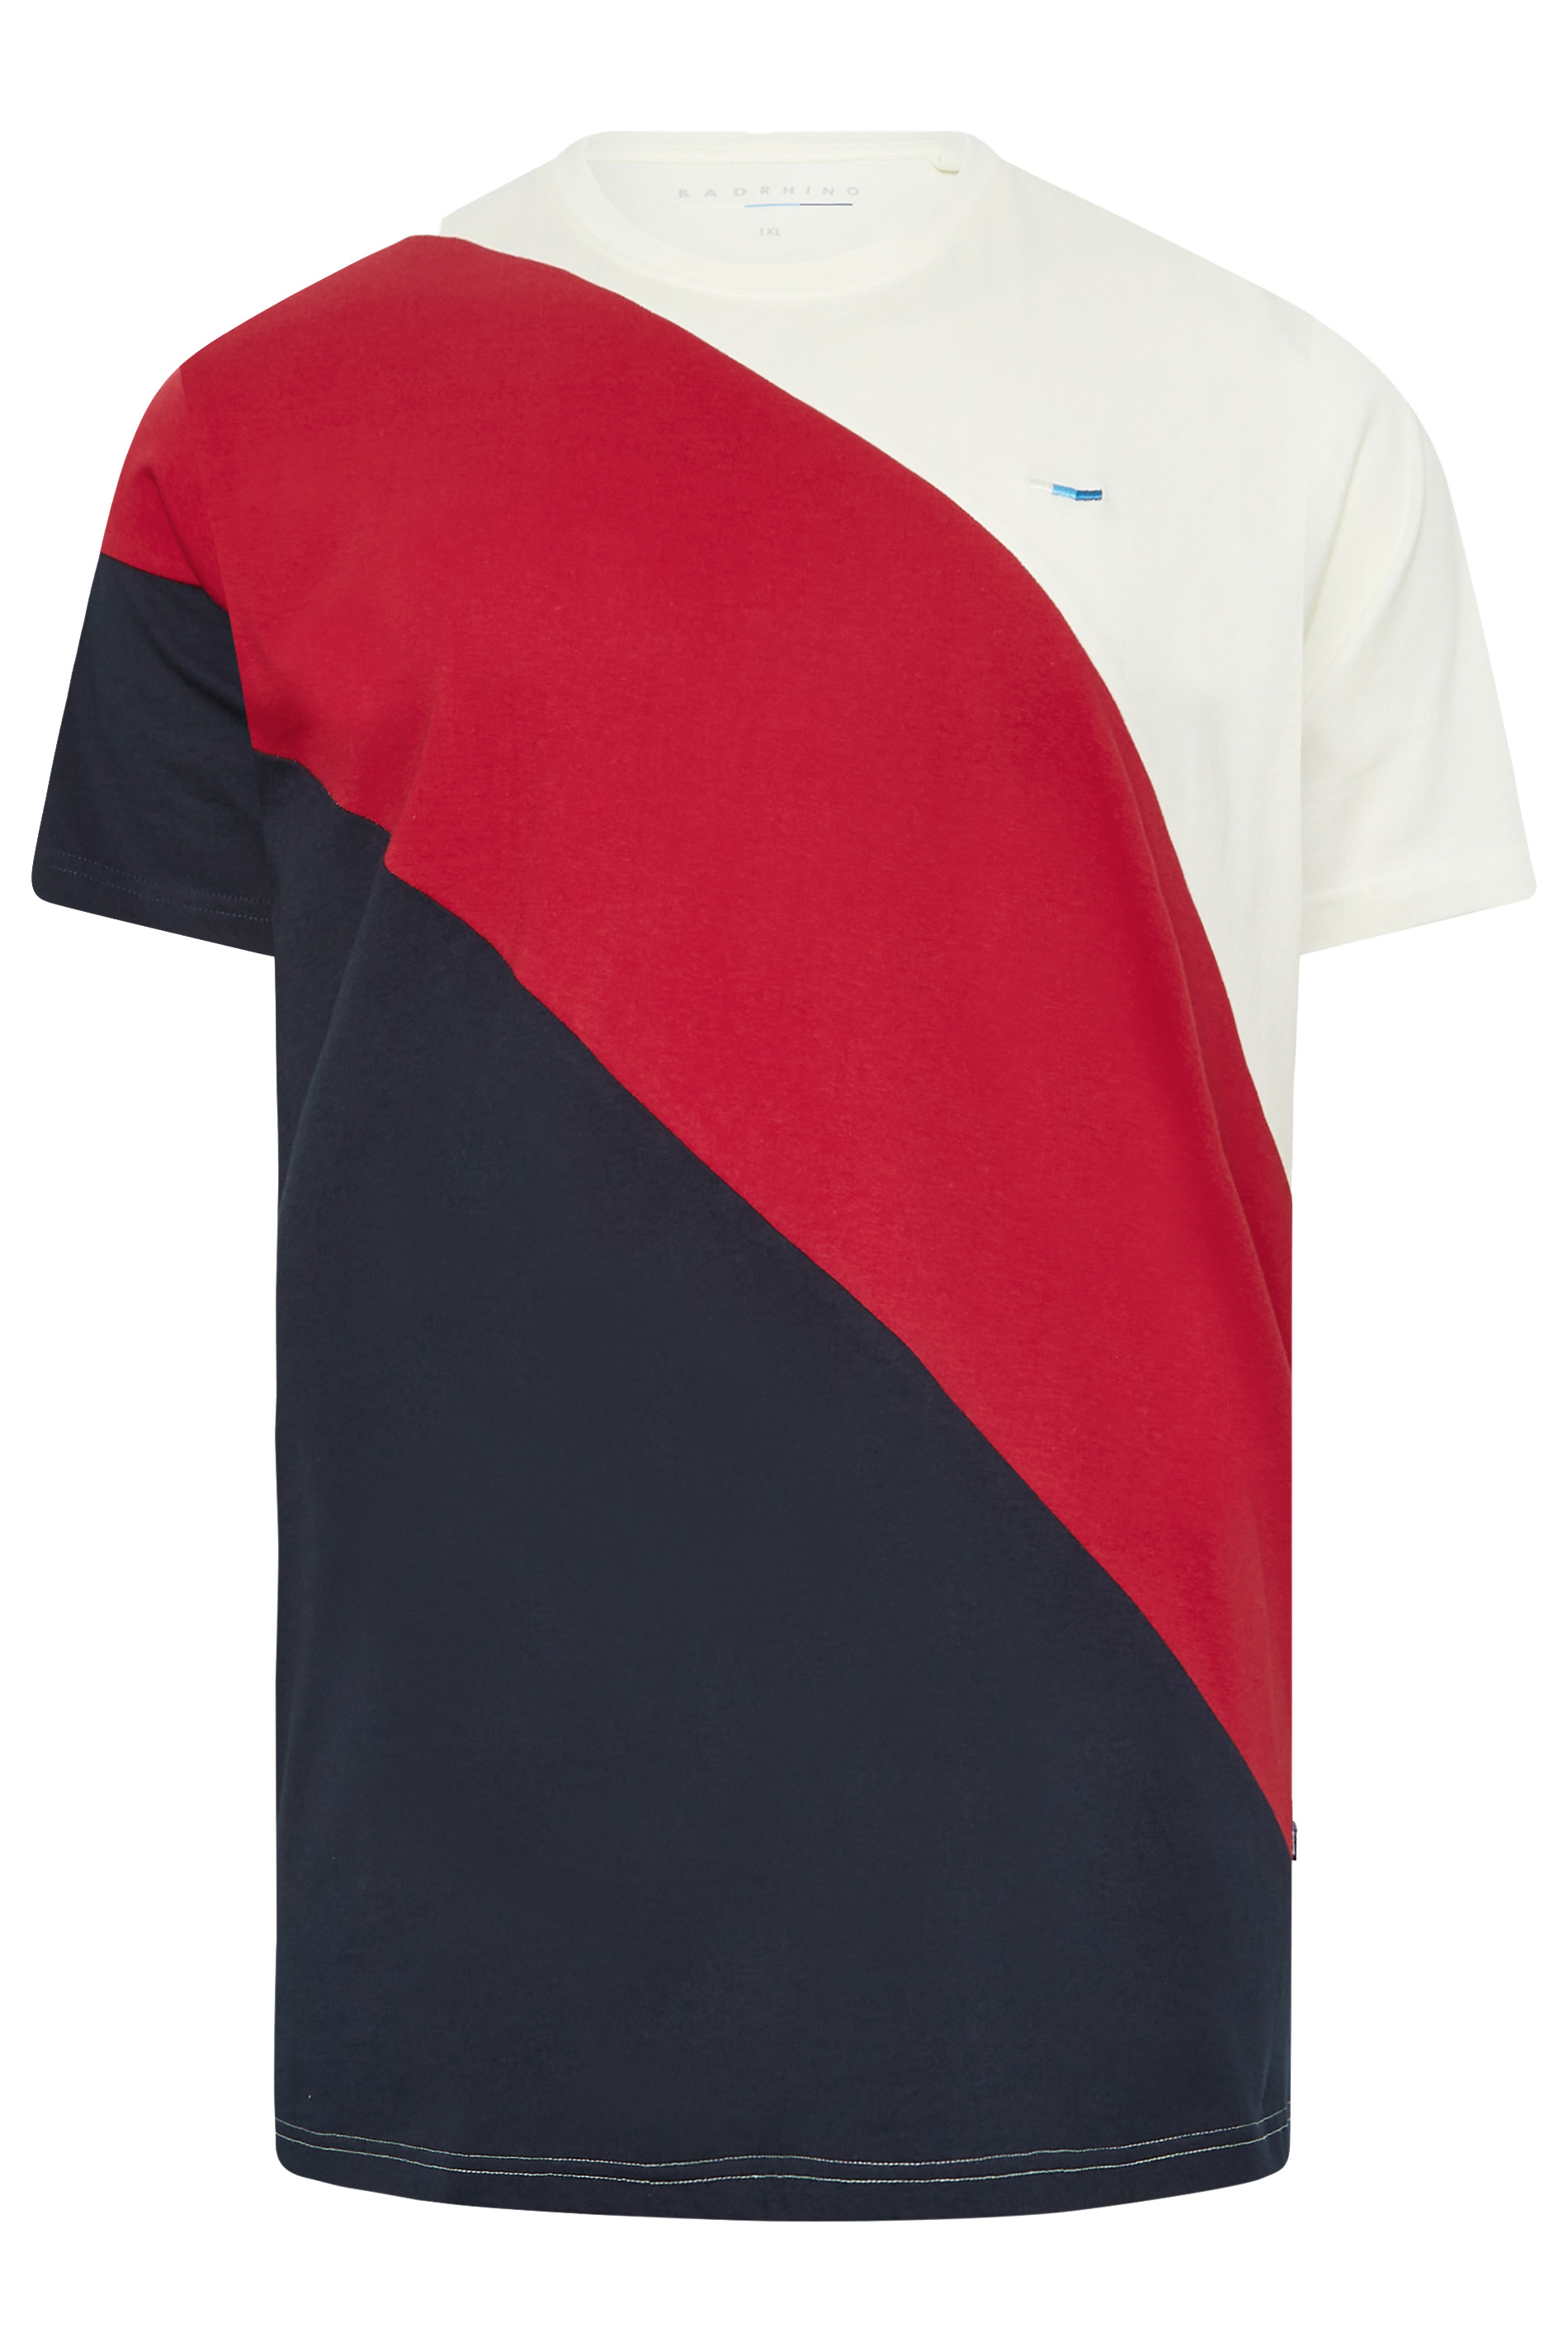 BadRhino Big & Tall Red Diagonal Stripe T-Shirt | BadRhino 3